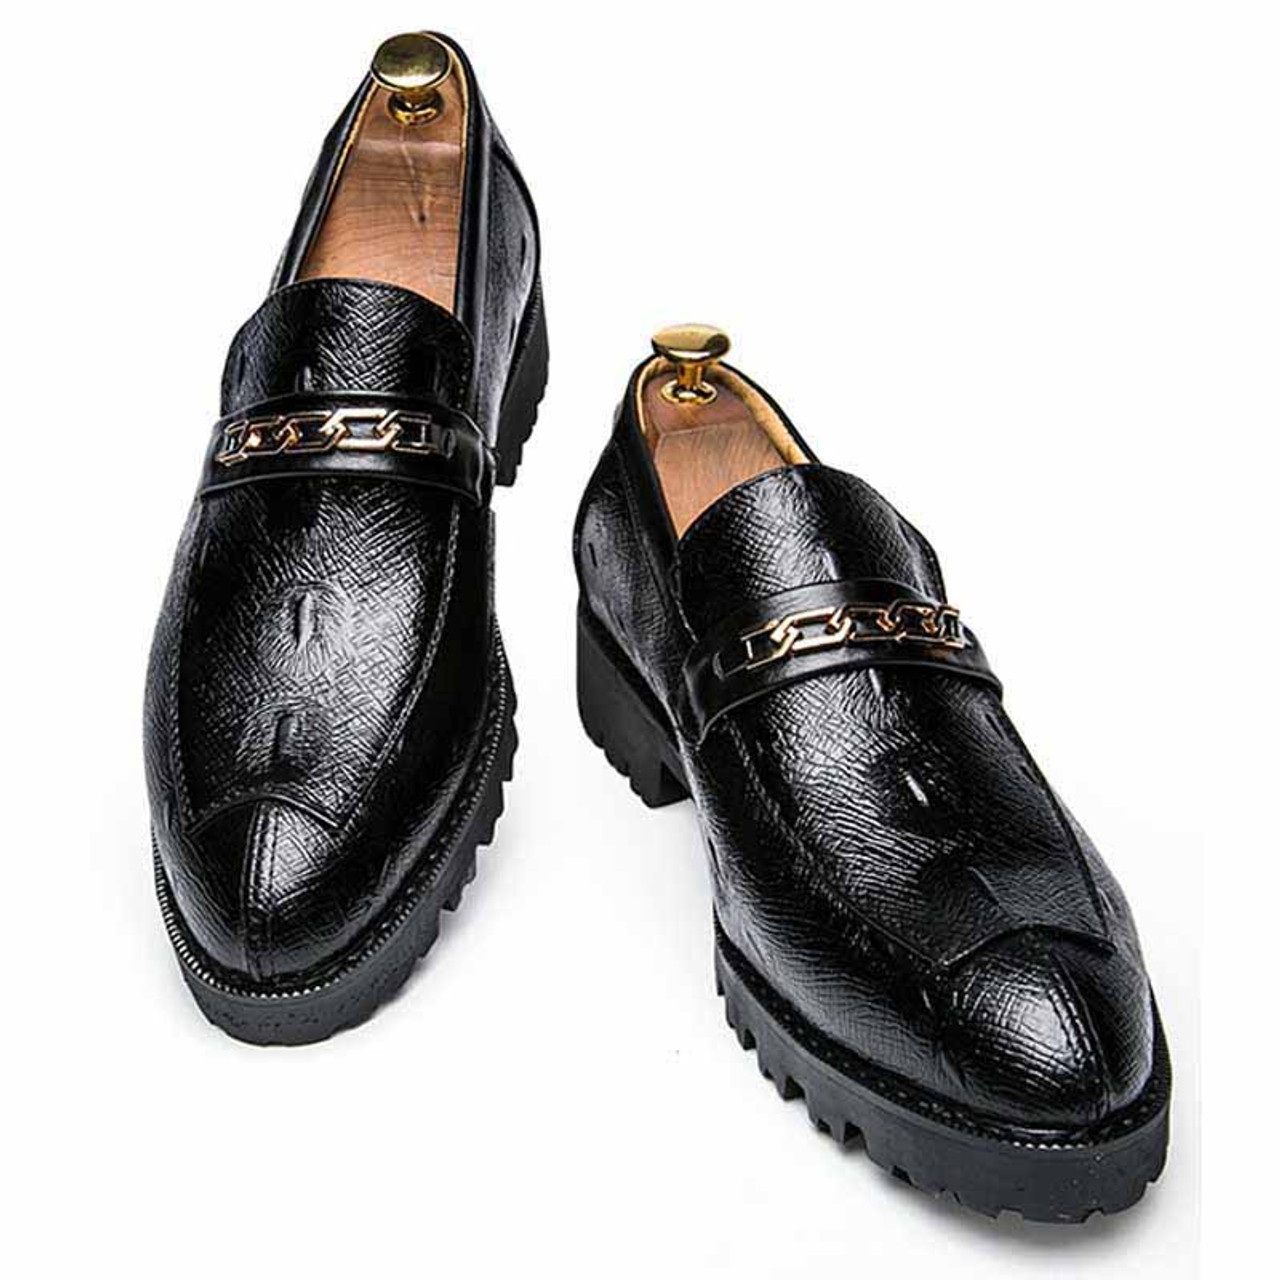 Black retro chain buckle leather slip on dress shoe | Mens dress shoes ...